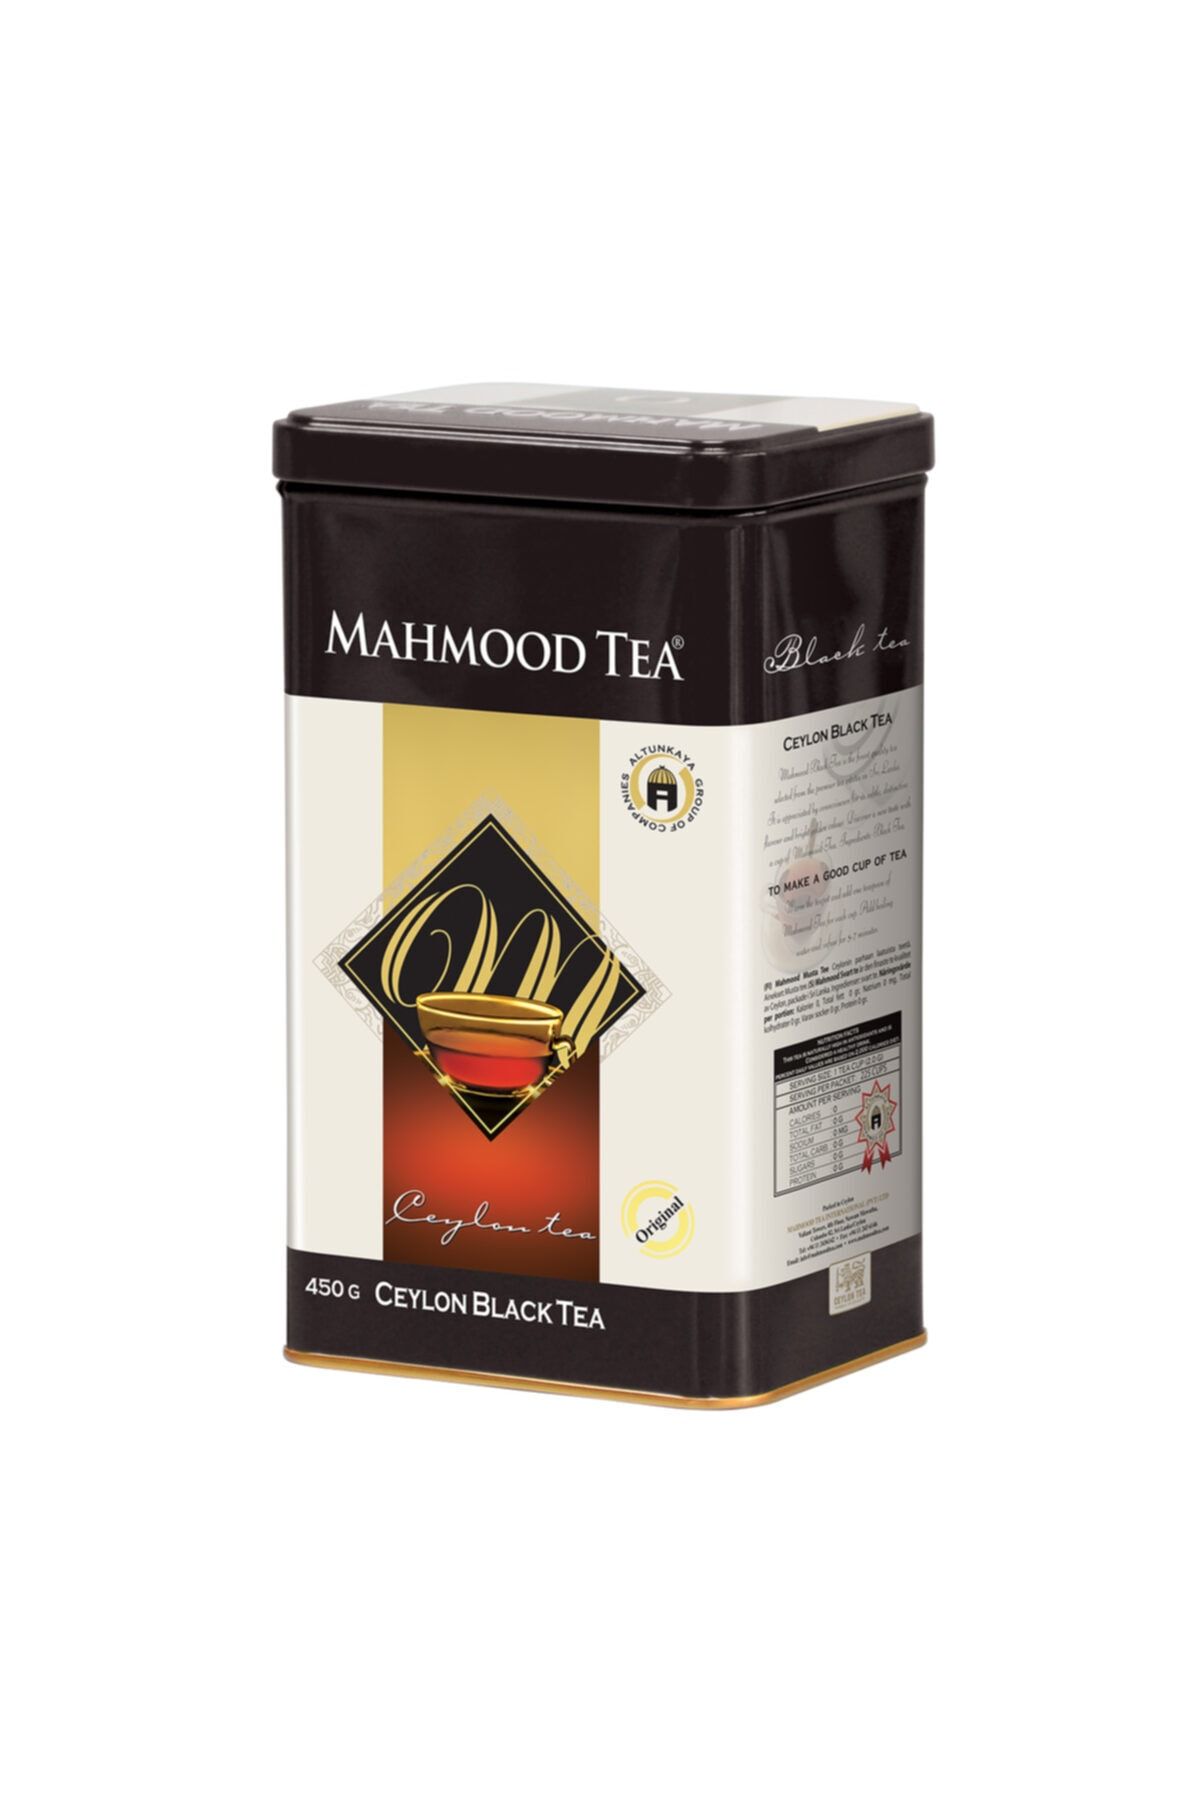 Mahmood Tea Ithal Saf Seylan Siyah Ceylon Dökme Çay Teneke Kutu 450 gr